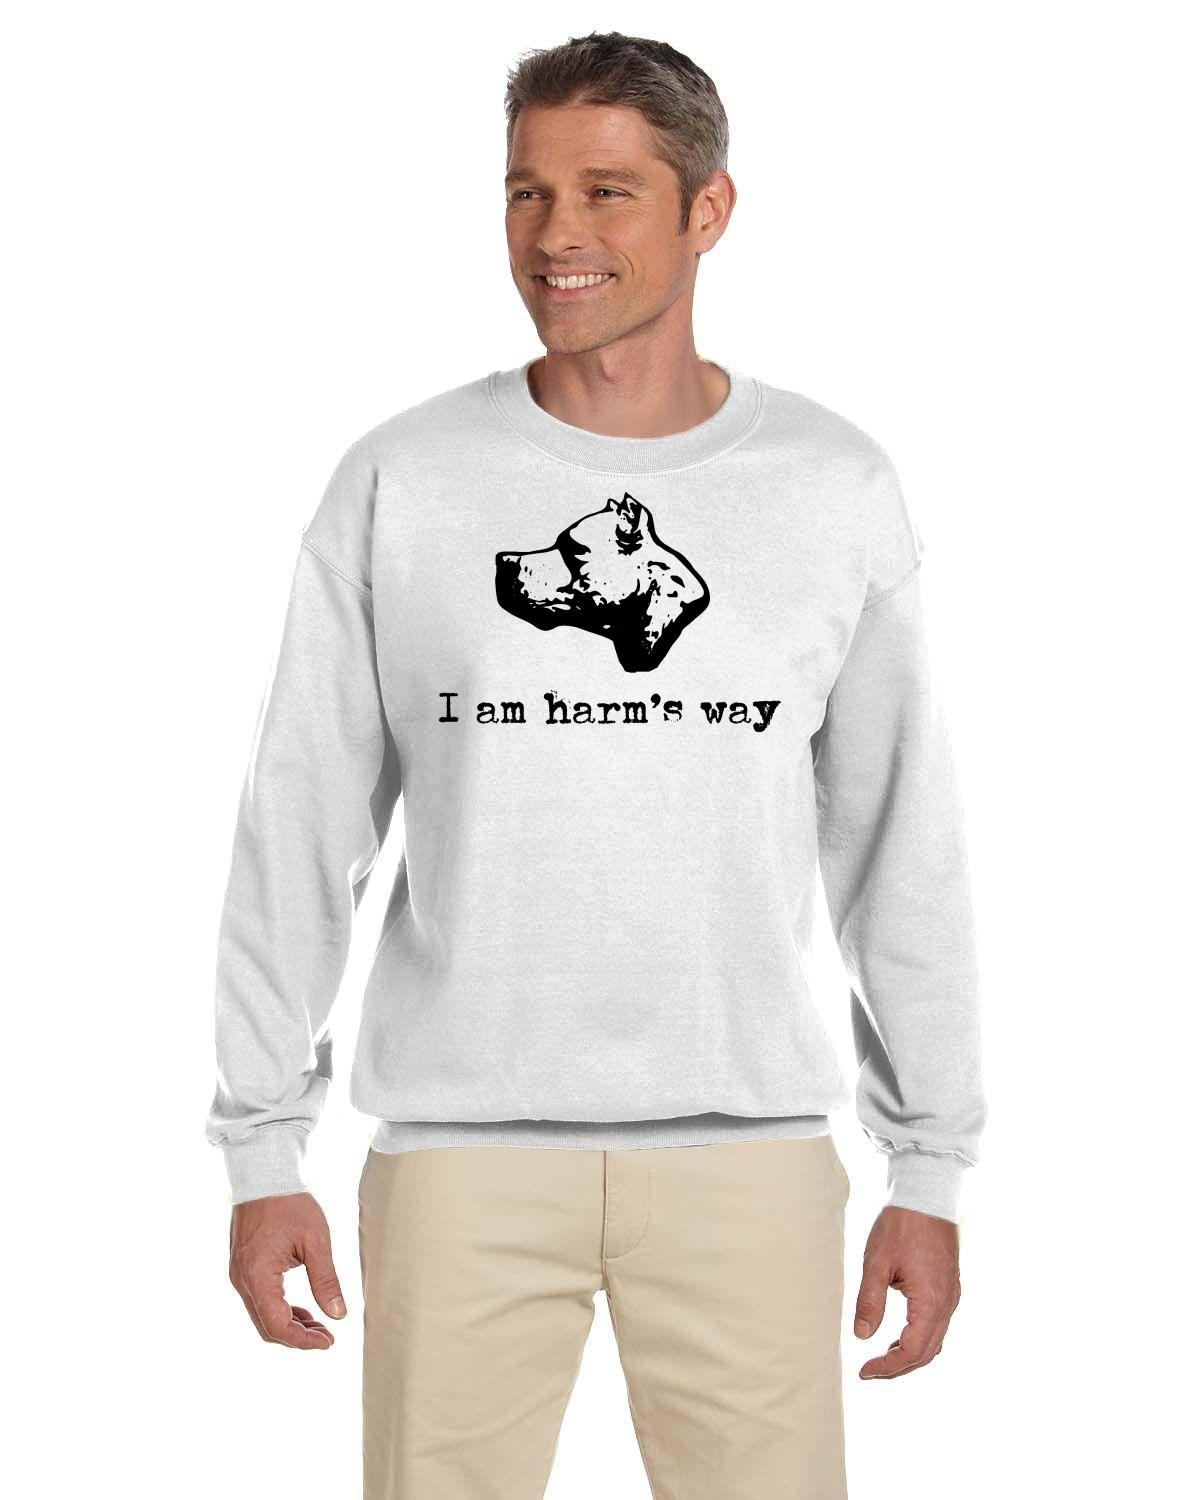 CDAC "I Am Harm's Way" Adult Crewneck Sweater Light Colours